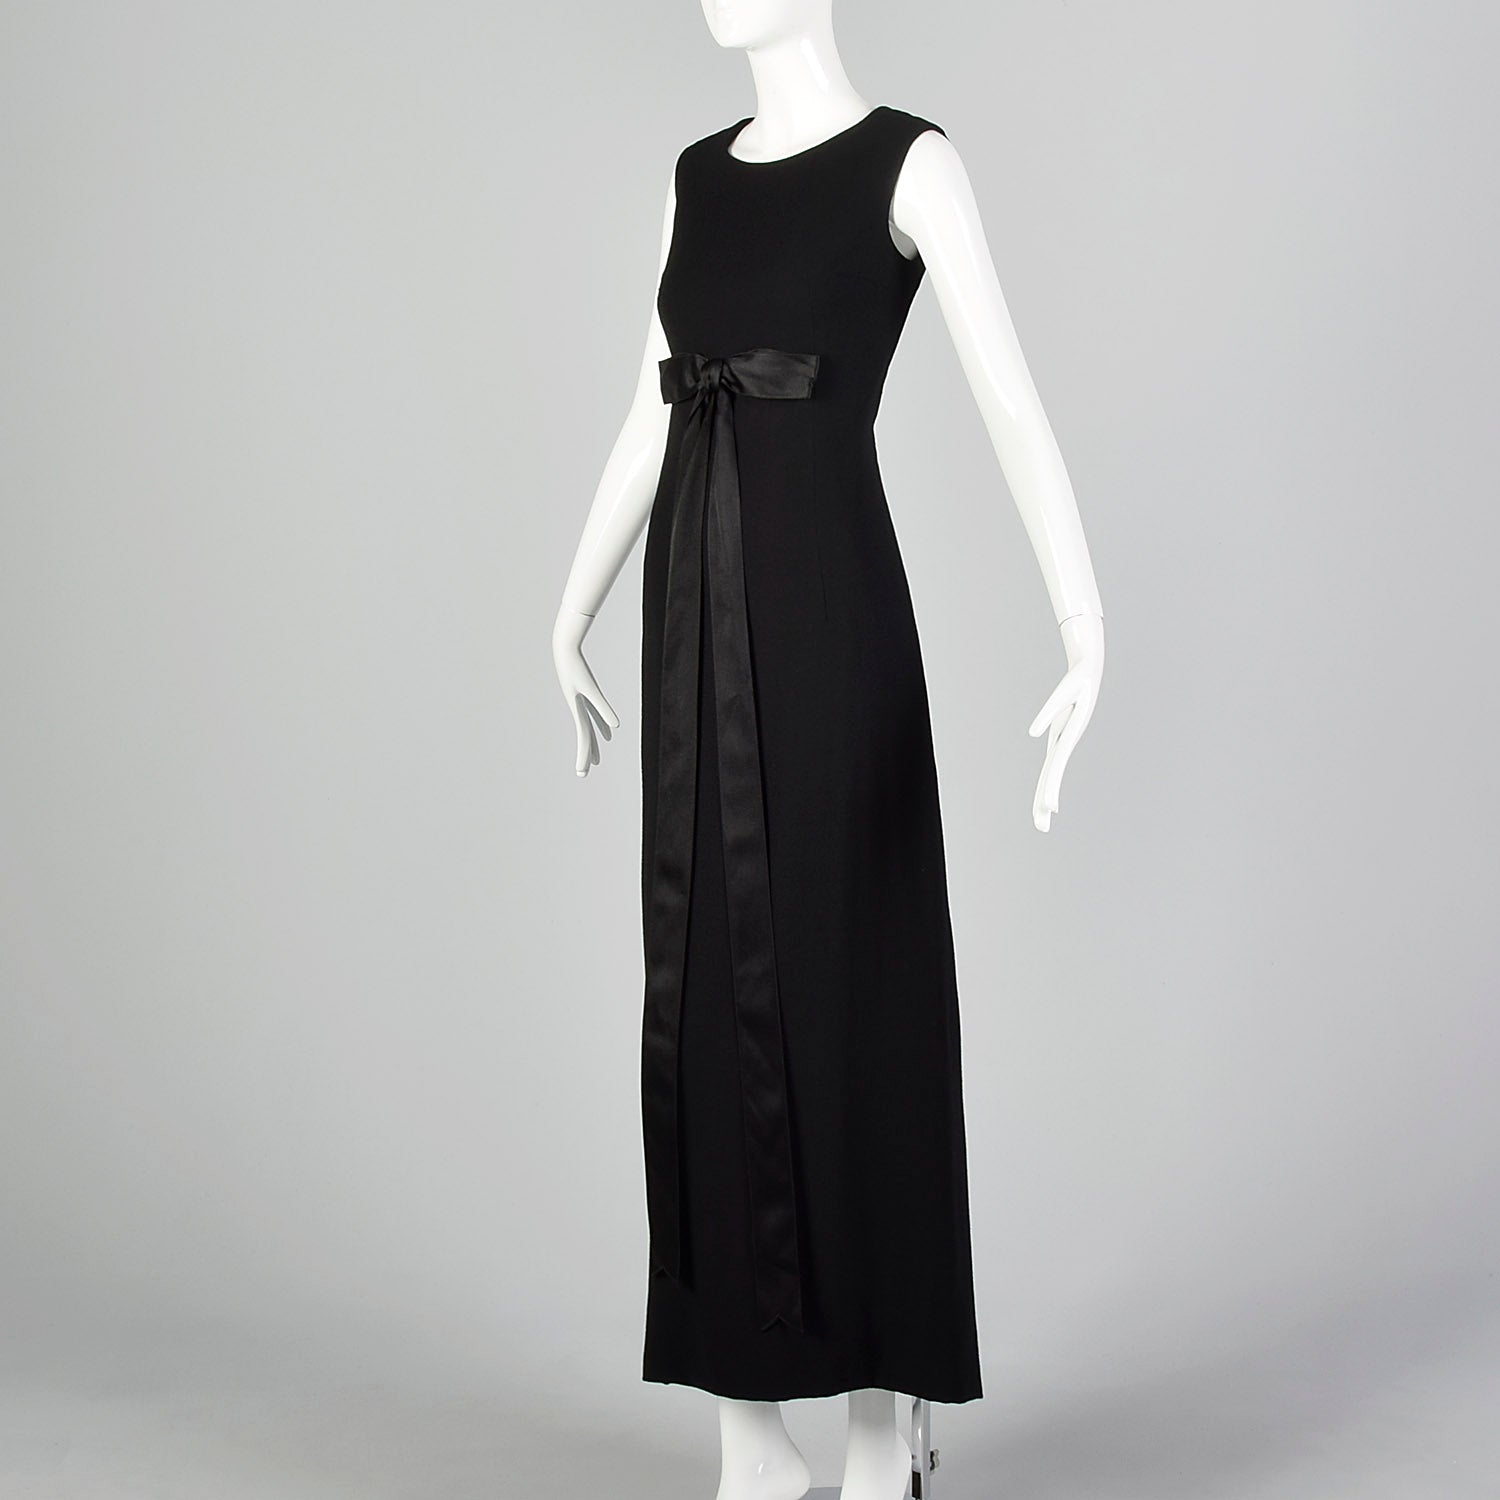 Small Christian Dior Marc Bohan 1960s Dress